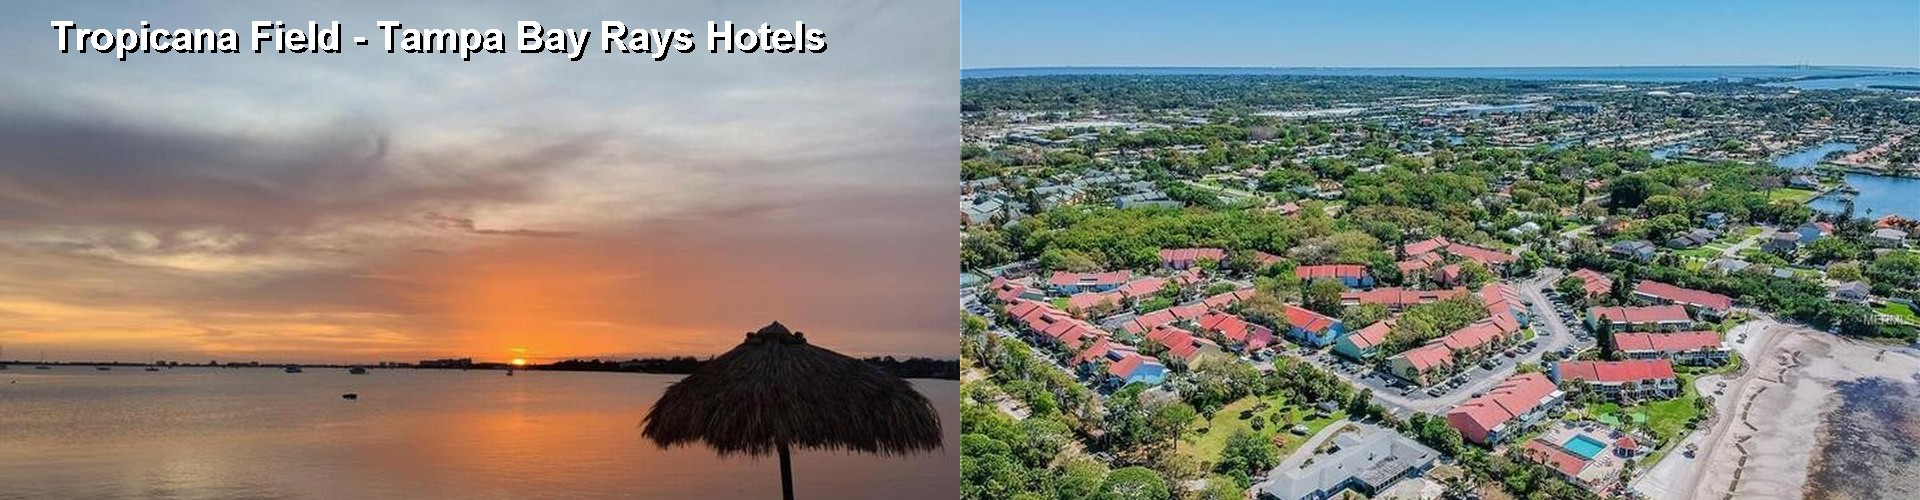 5 Best Hotels near Tropicana Field - Tampa Bay Rays